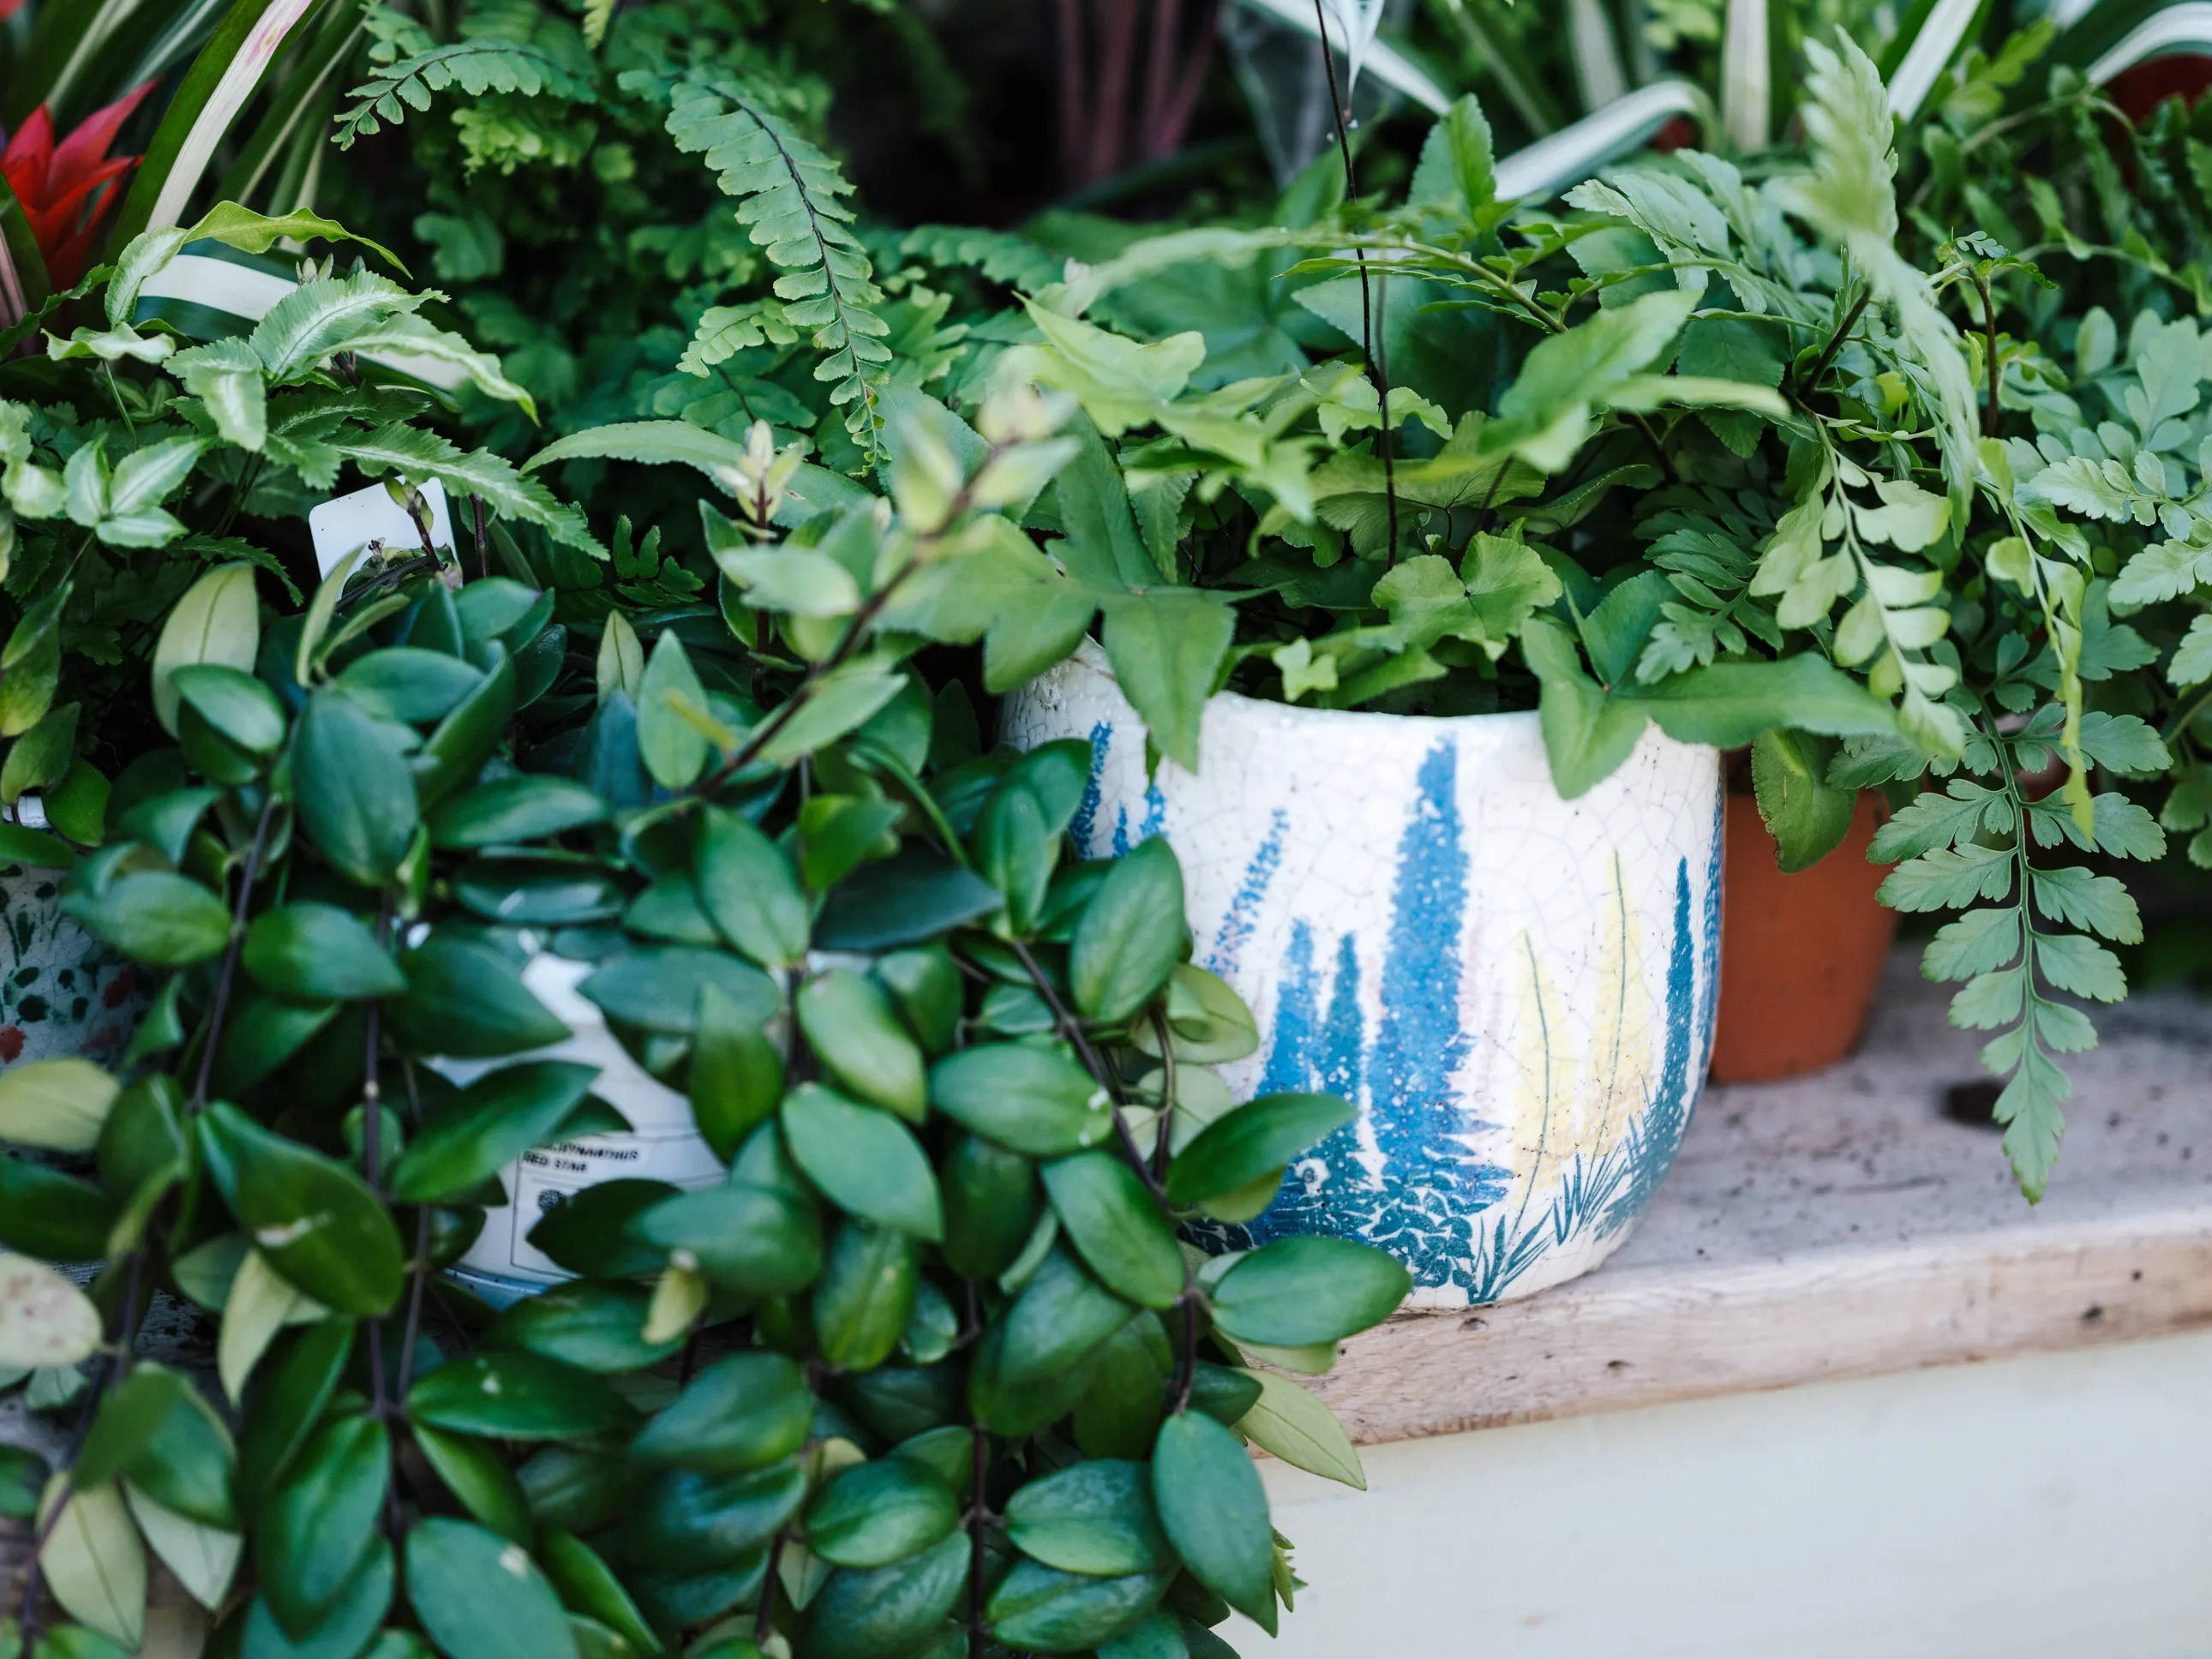 Flourishing potted plants